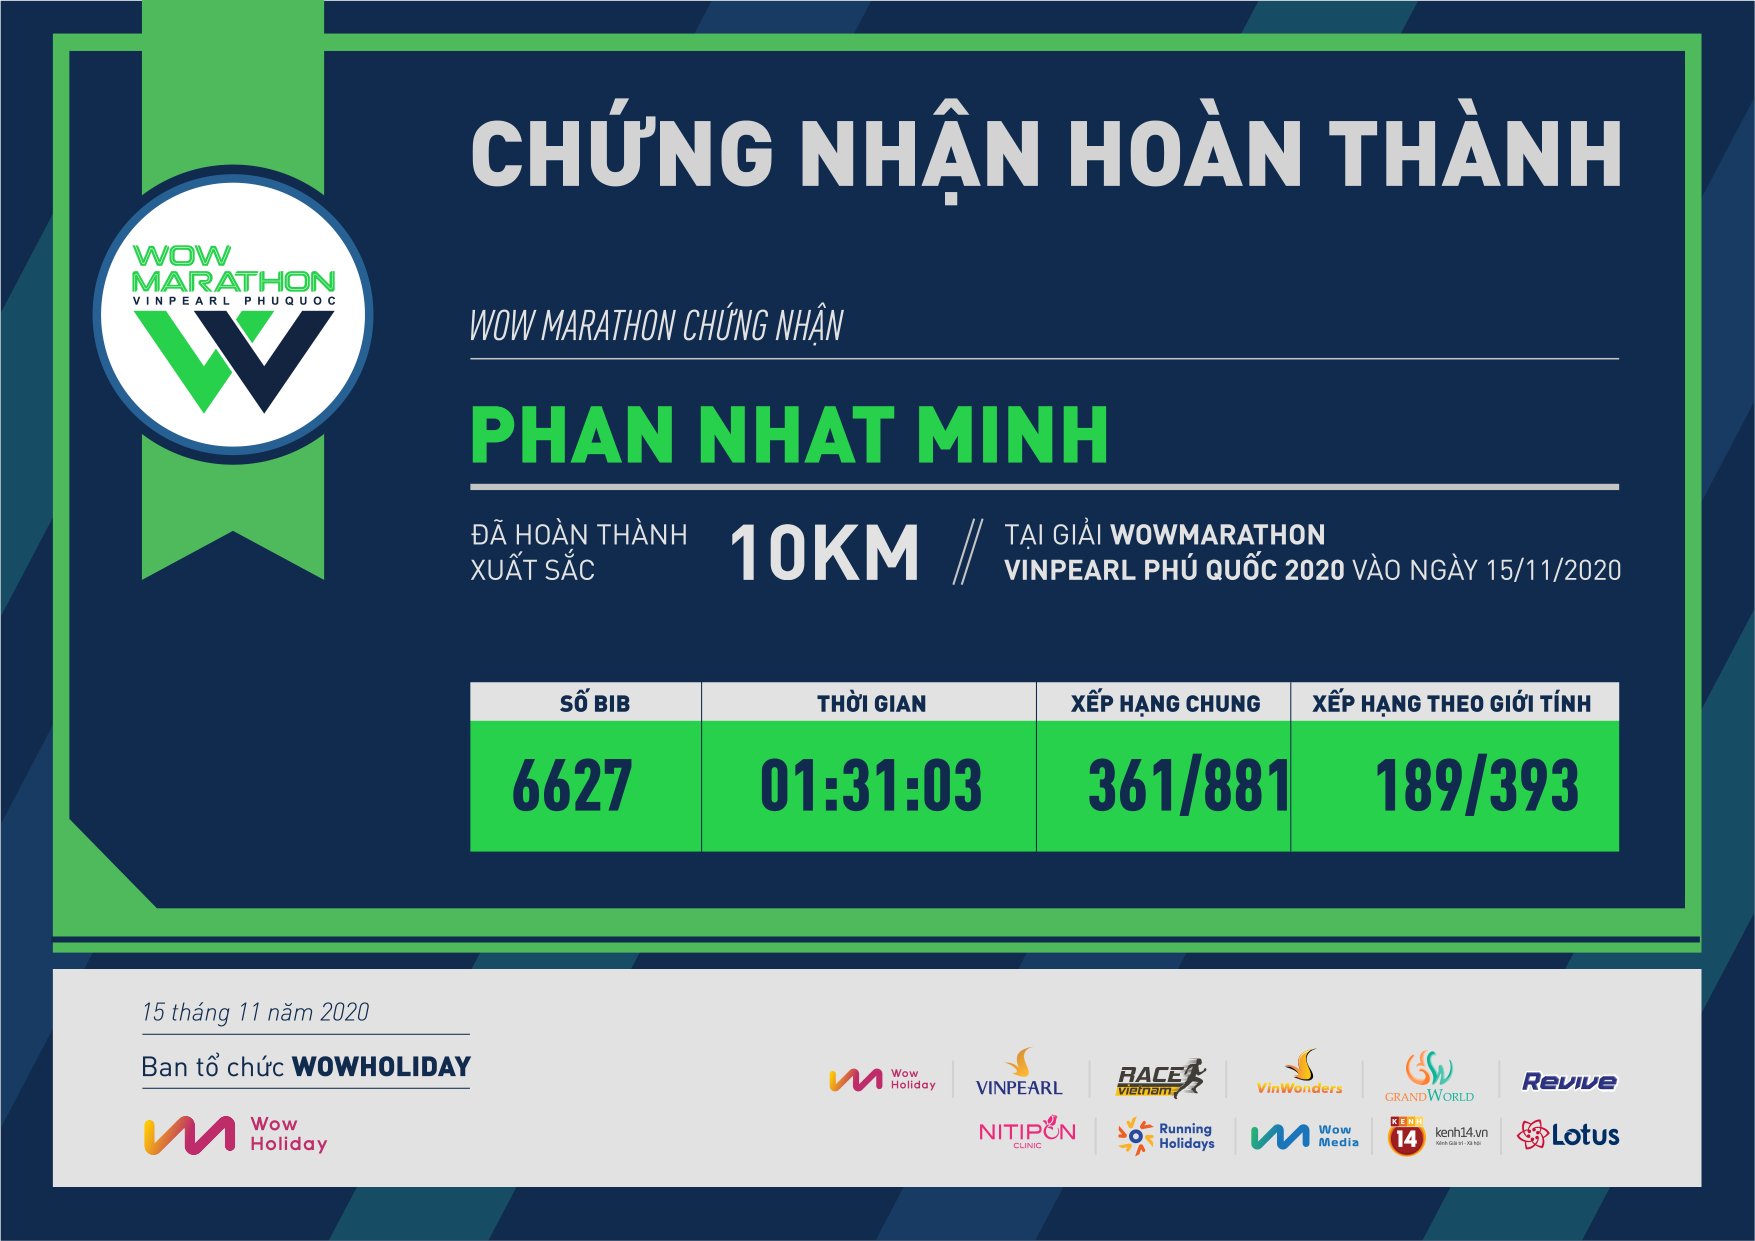 6627 - Phan Nhat Minh